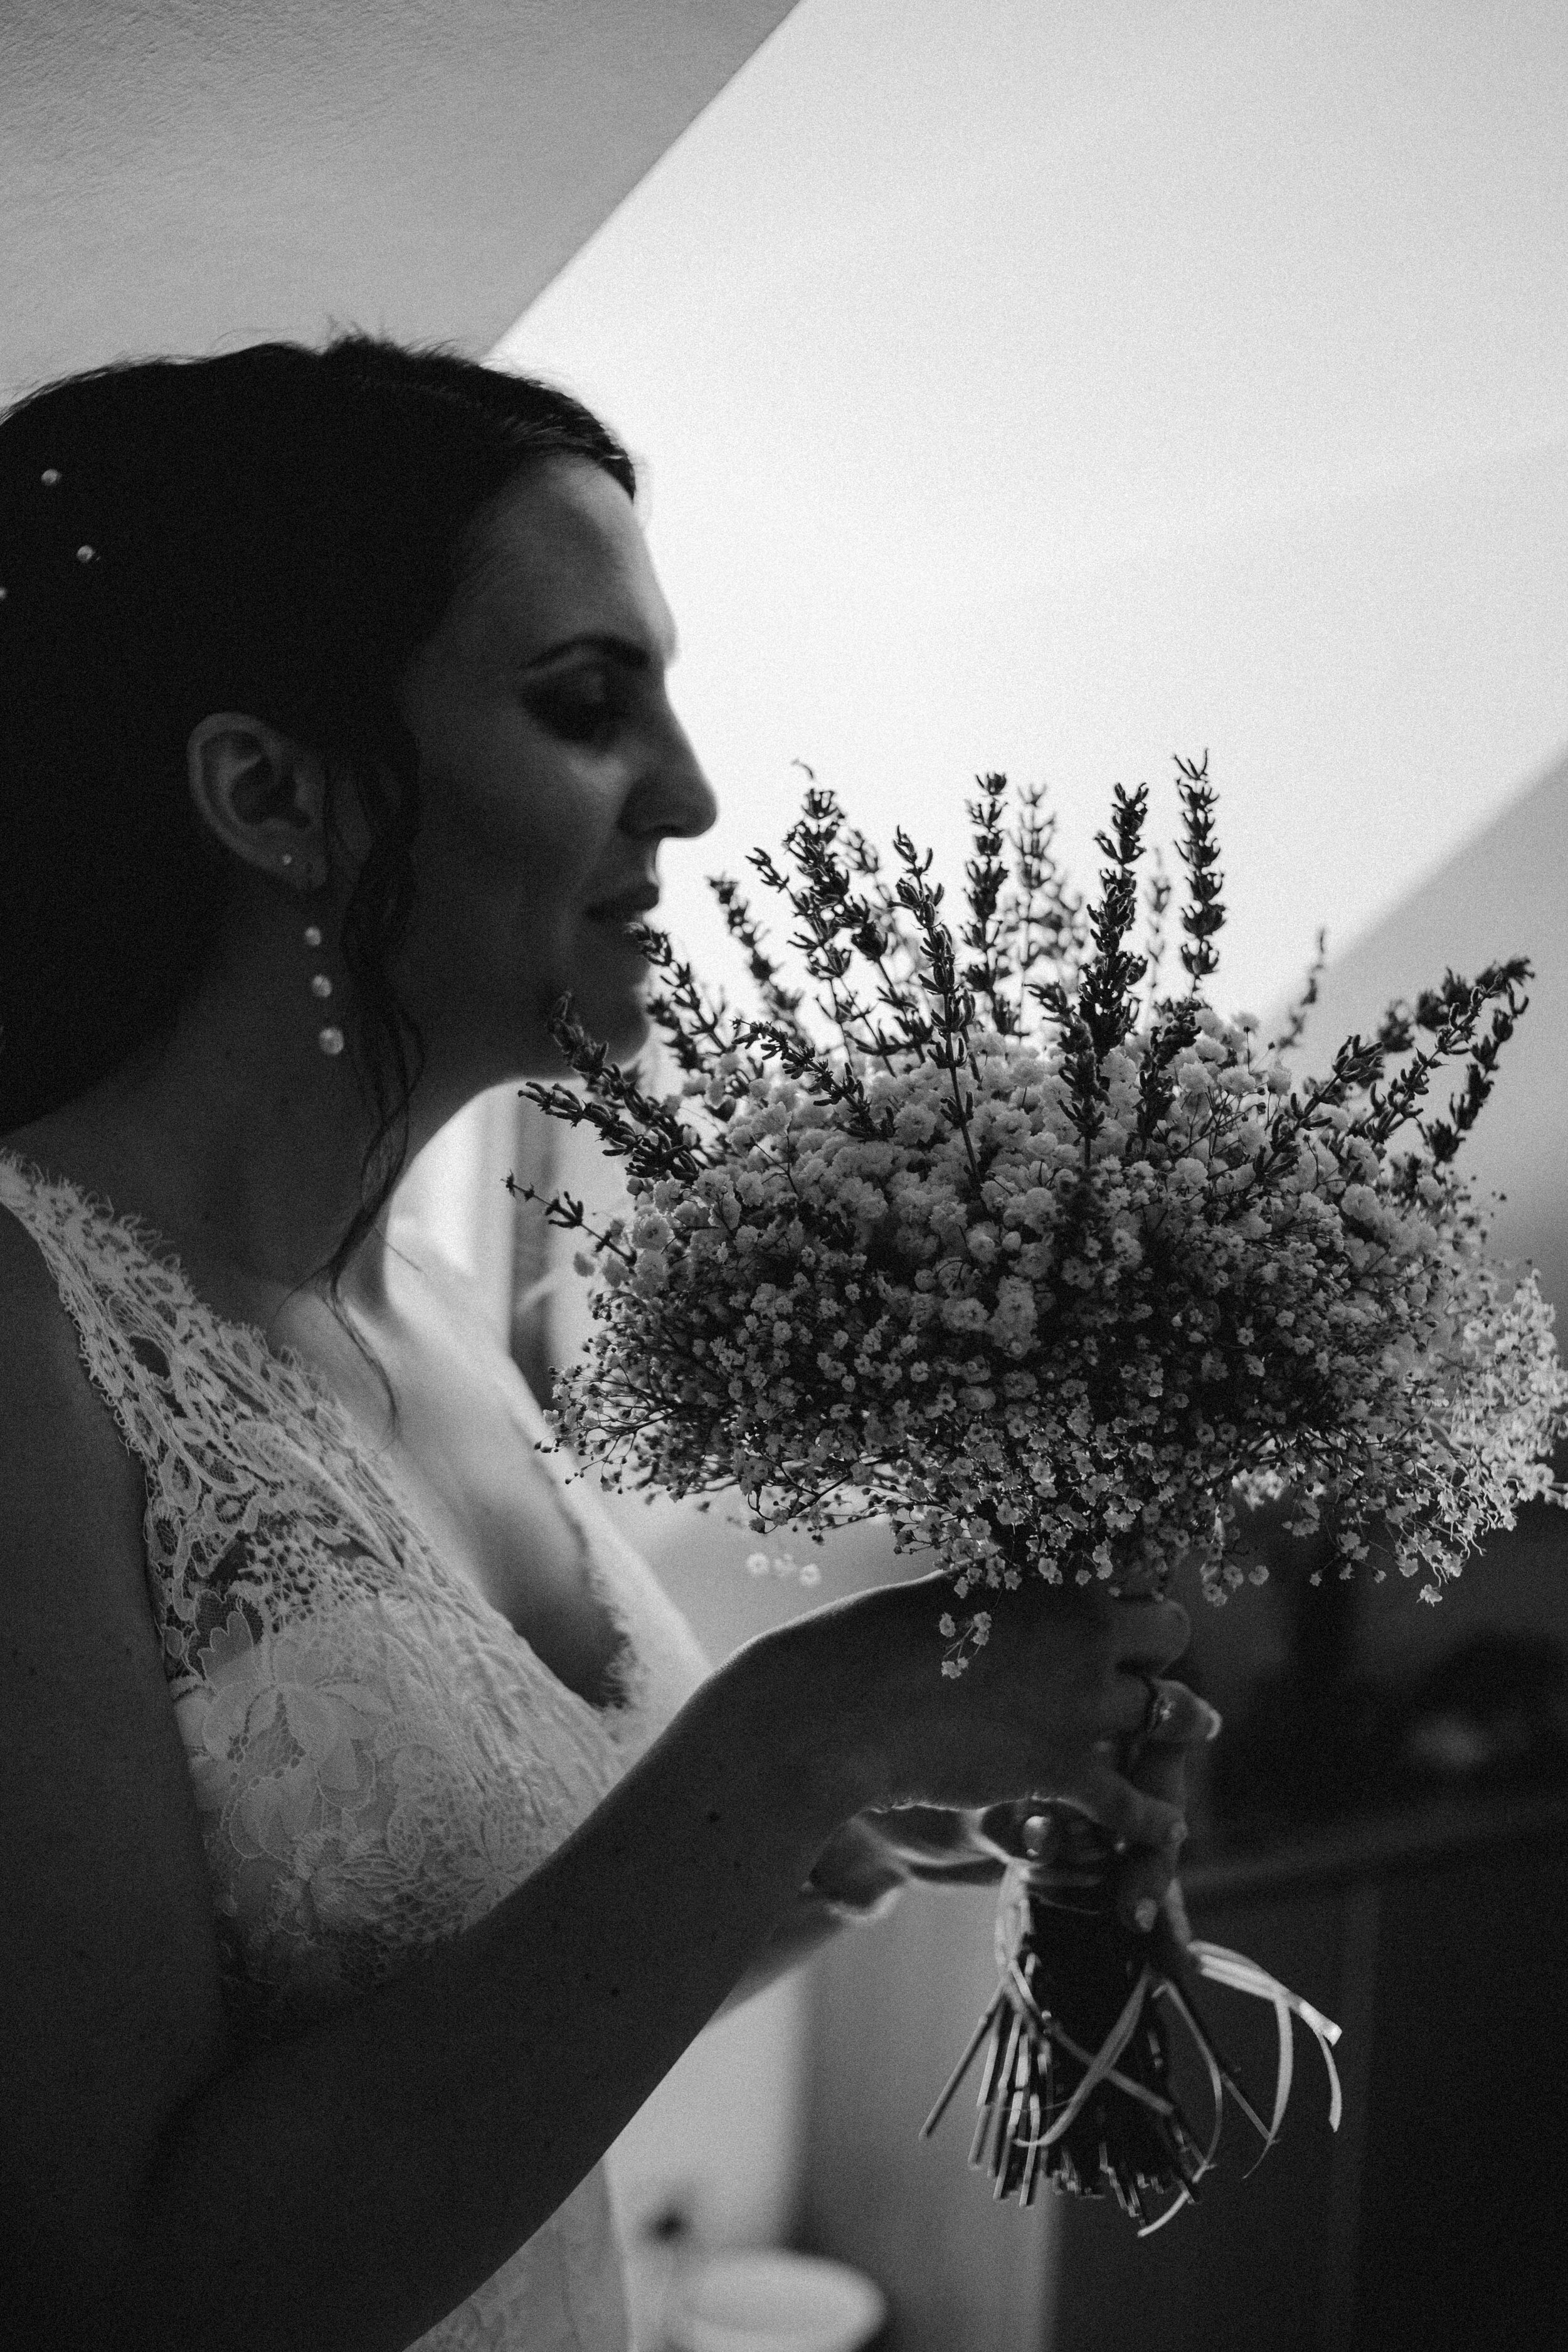 013 - Preparazione sposa - Miriam Callegari Fotografa.JPG